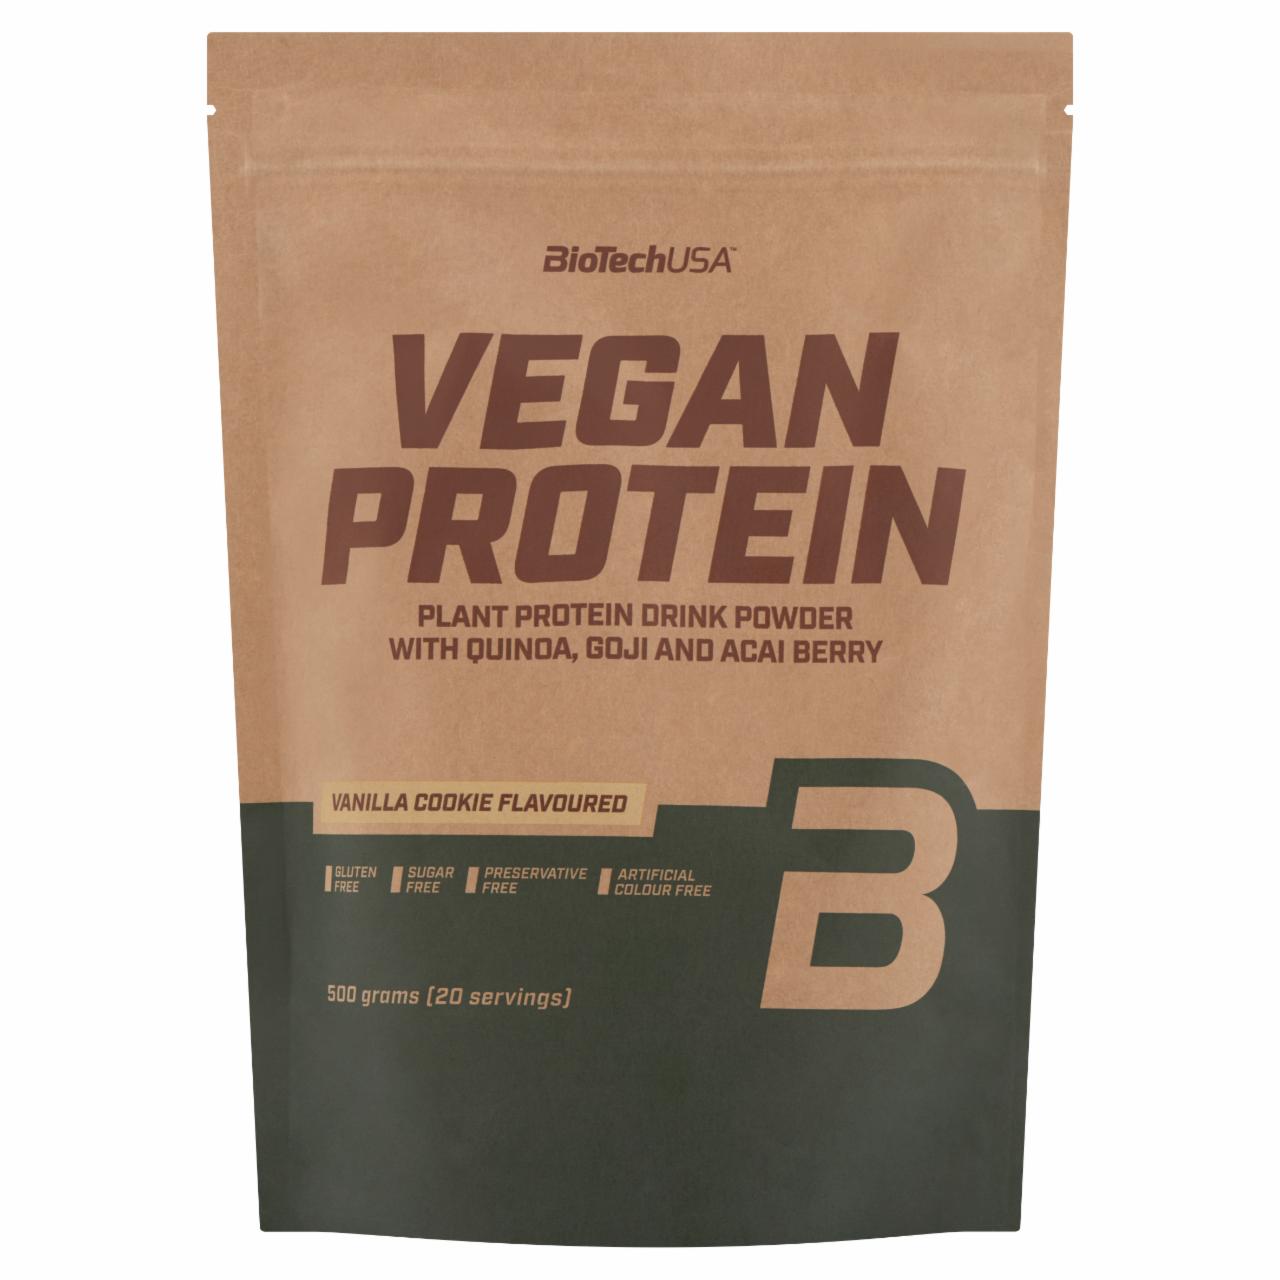 Képek - Vegan Protein cukormentes vaníliás sütemény ízű fehérje italpor BioTechUSA